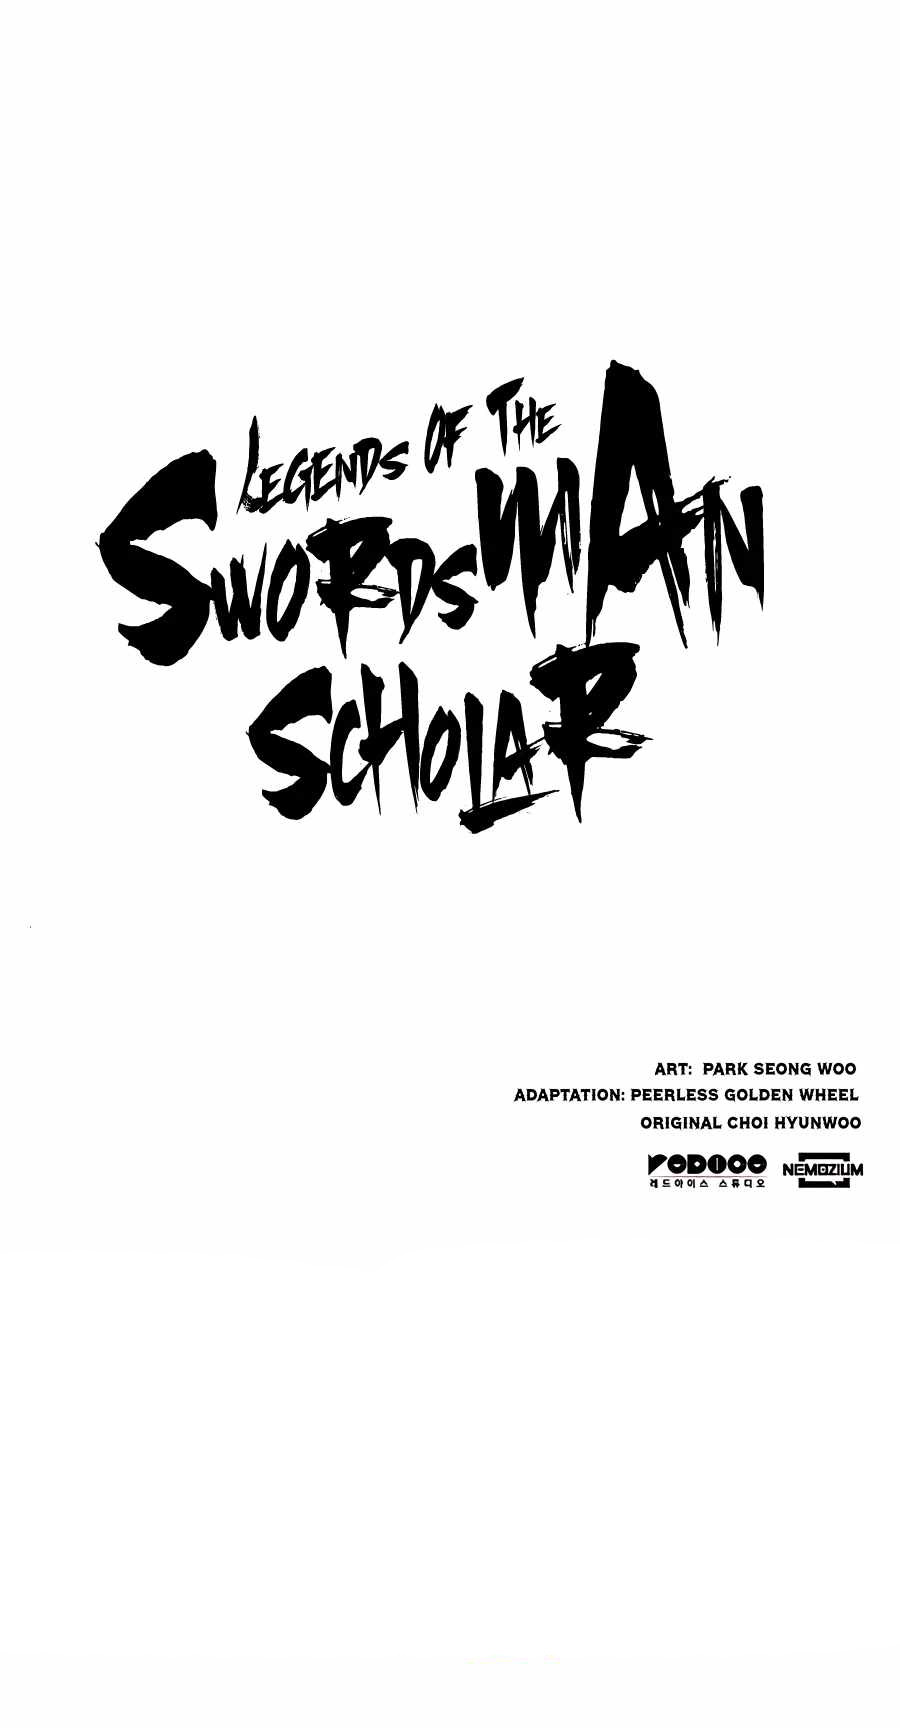 Records of the Swordsman Scholar 72 (16)